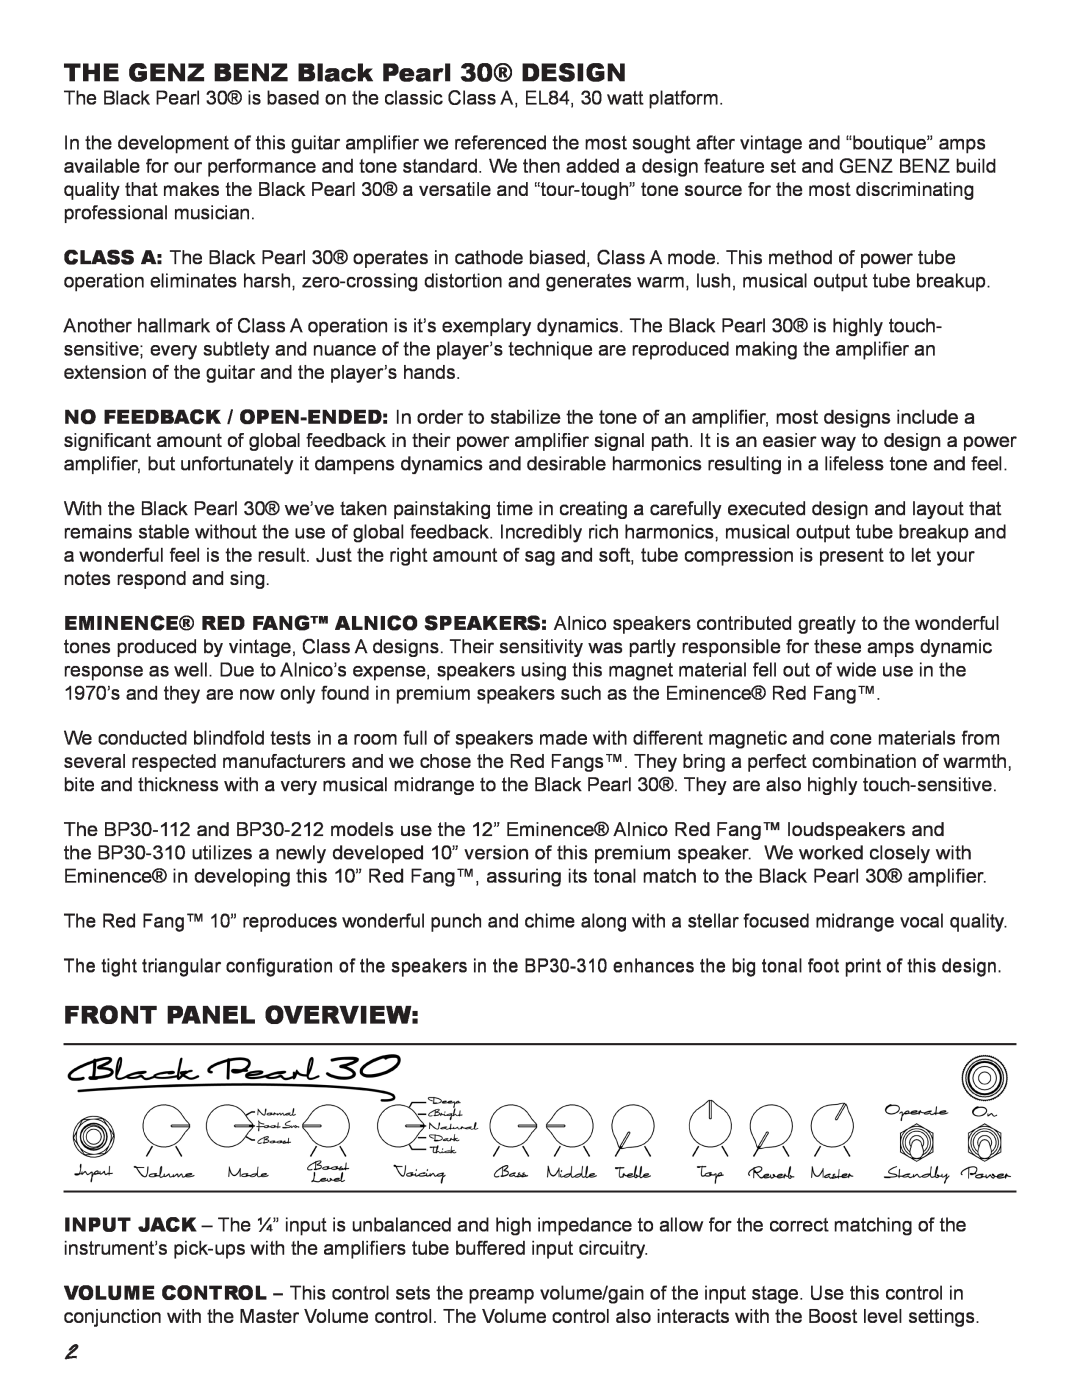 Genz-Benz BP30 owner manual THE GENZ BENZ Black Pearl 30 DESIGN, Front Panel Overview 